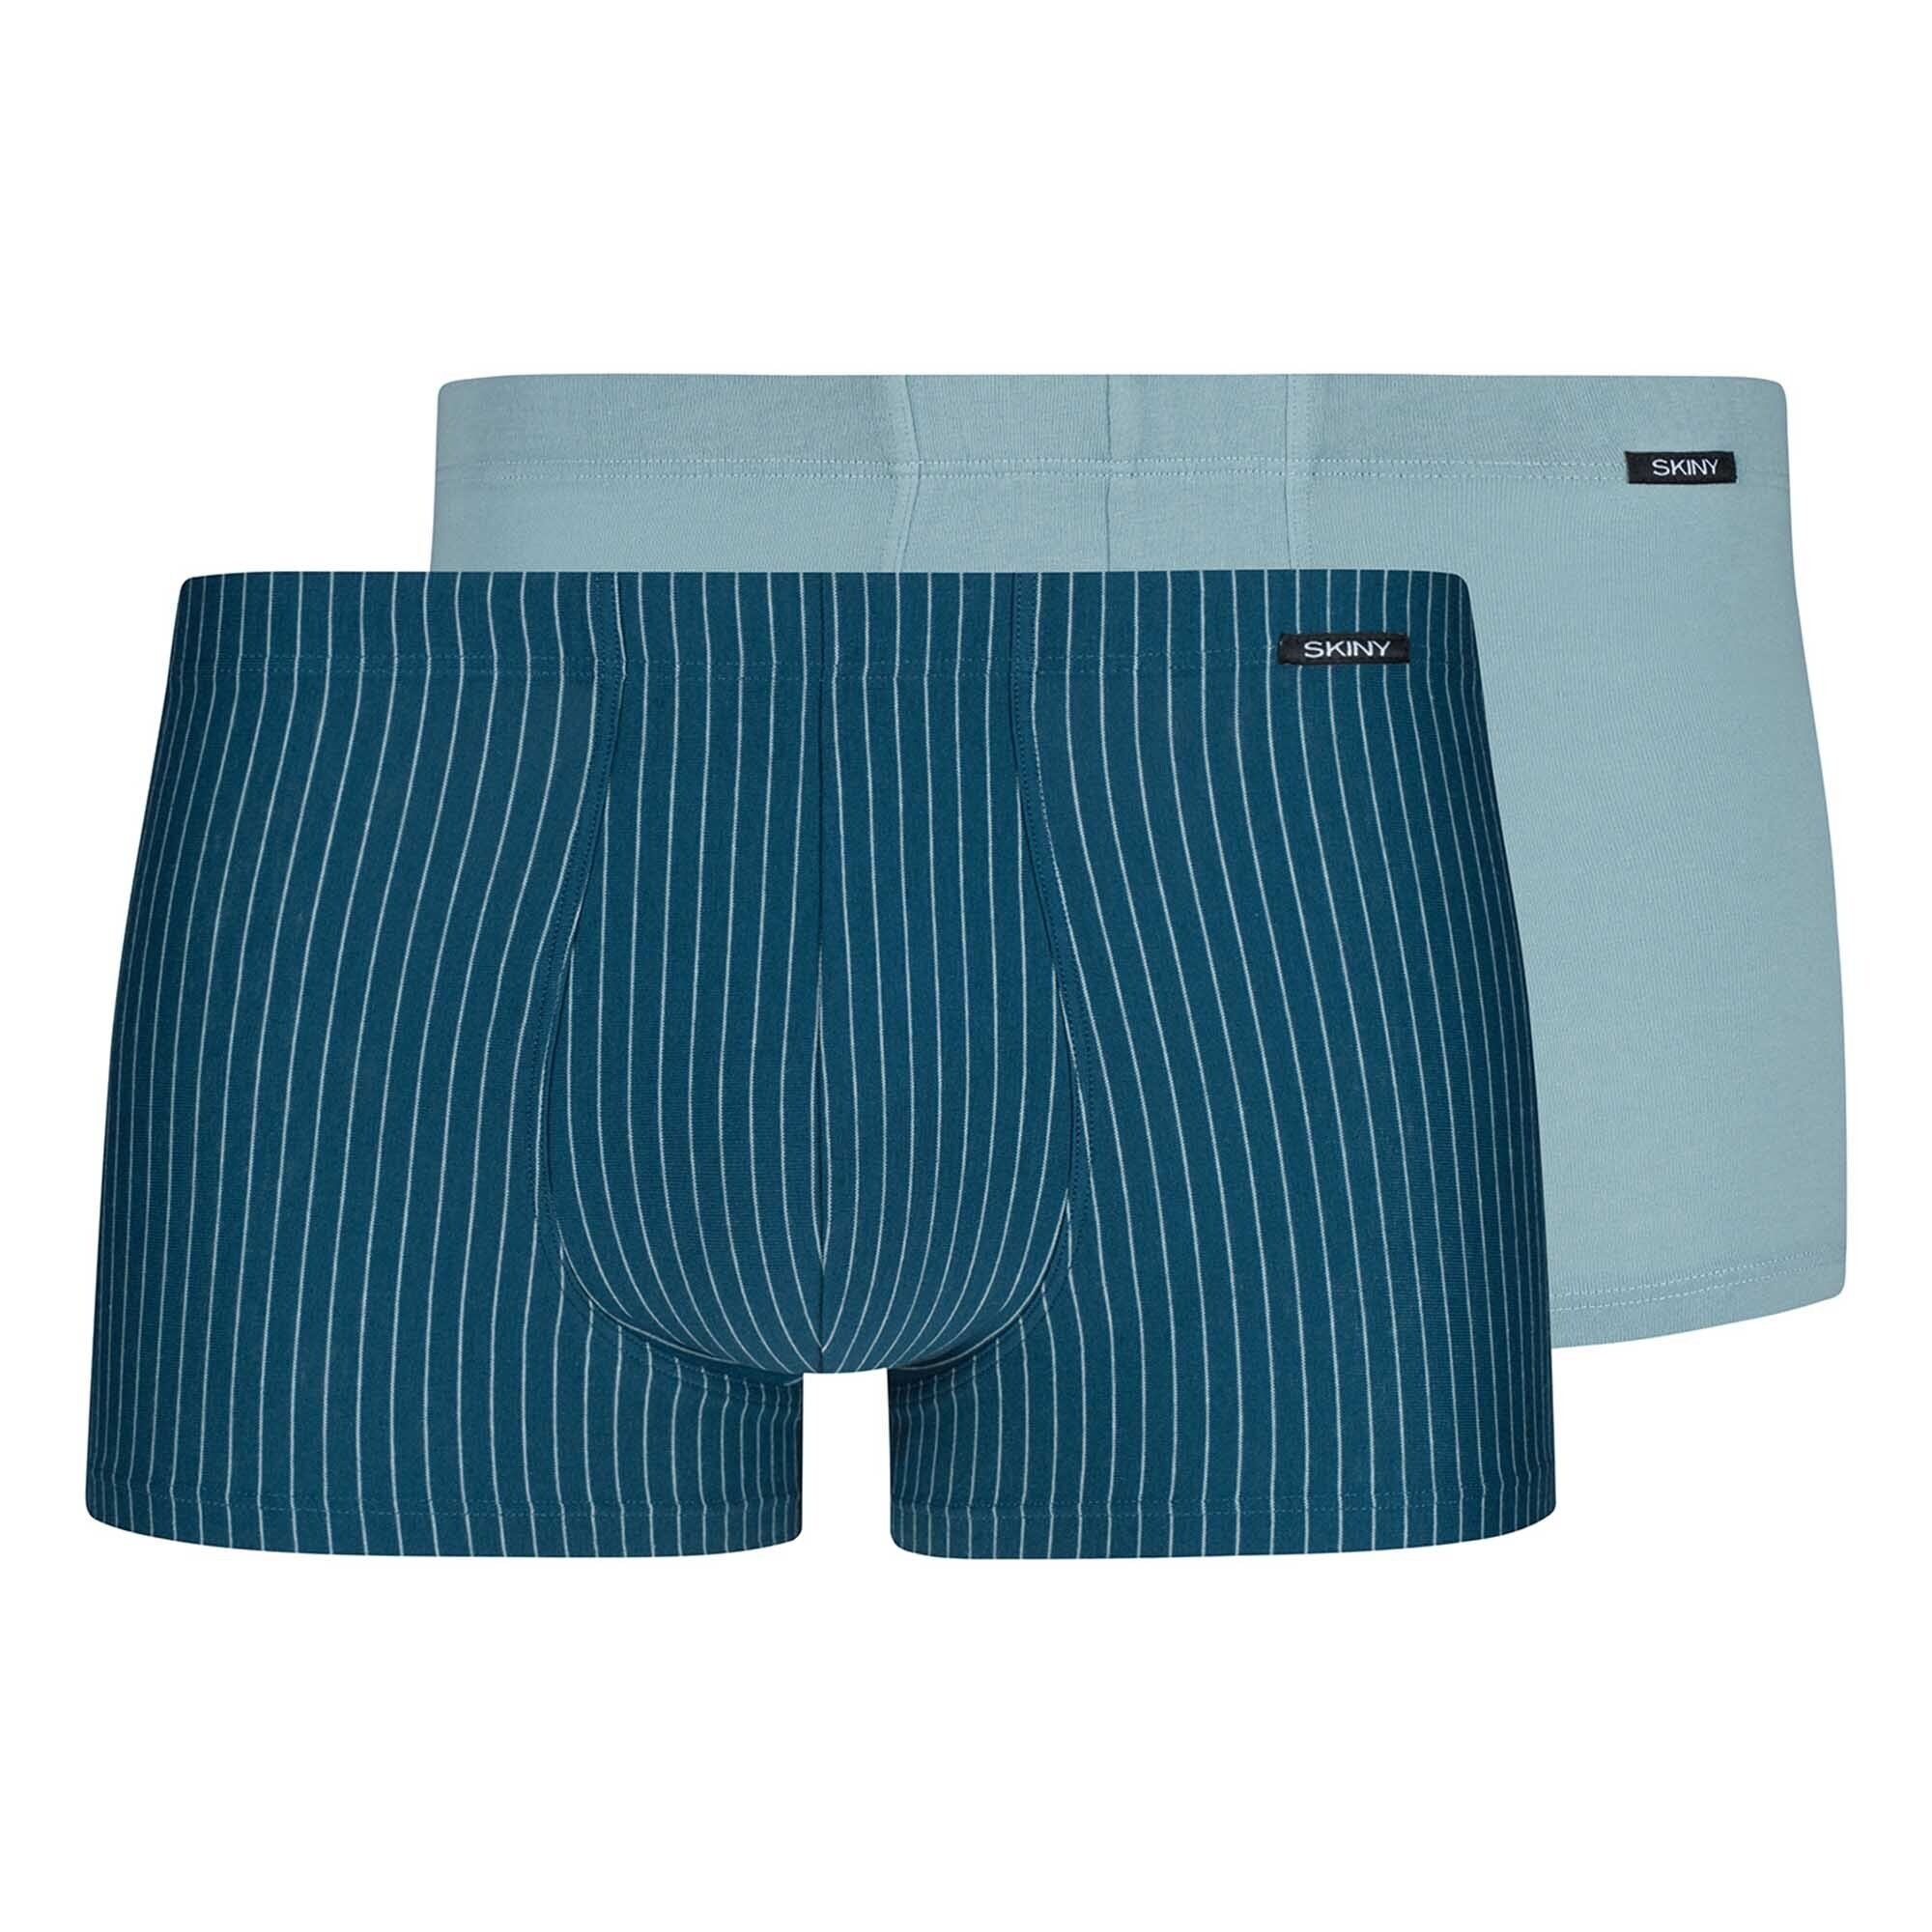 Skiny Boxer Herren Boxer Shorts, 2er Pack - Pants, Shorts Hellblau/Blau